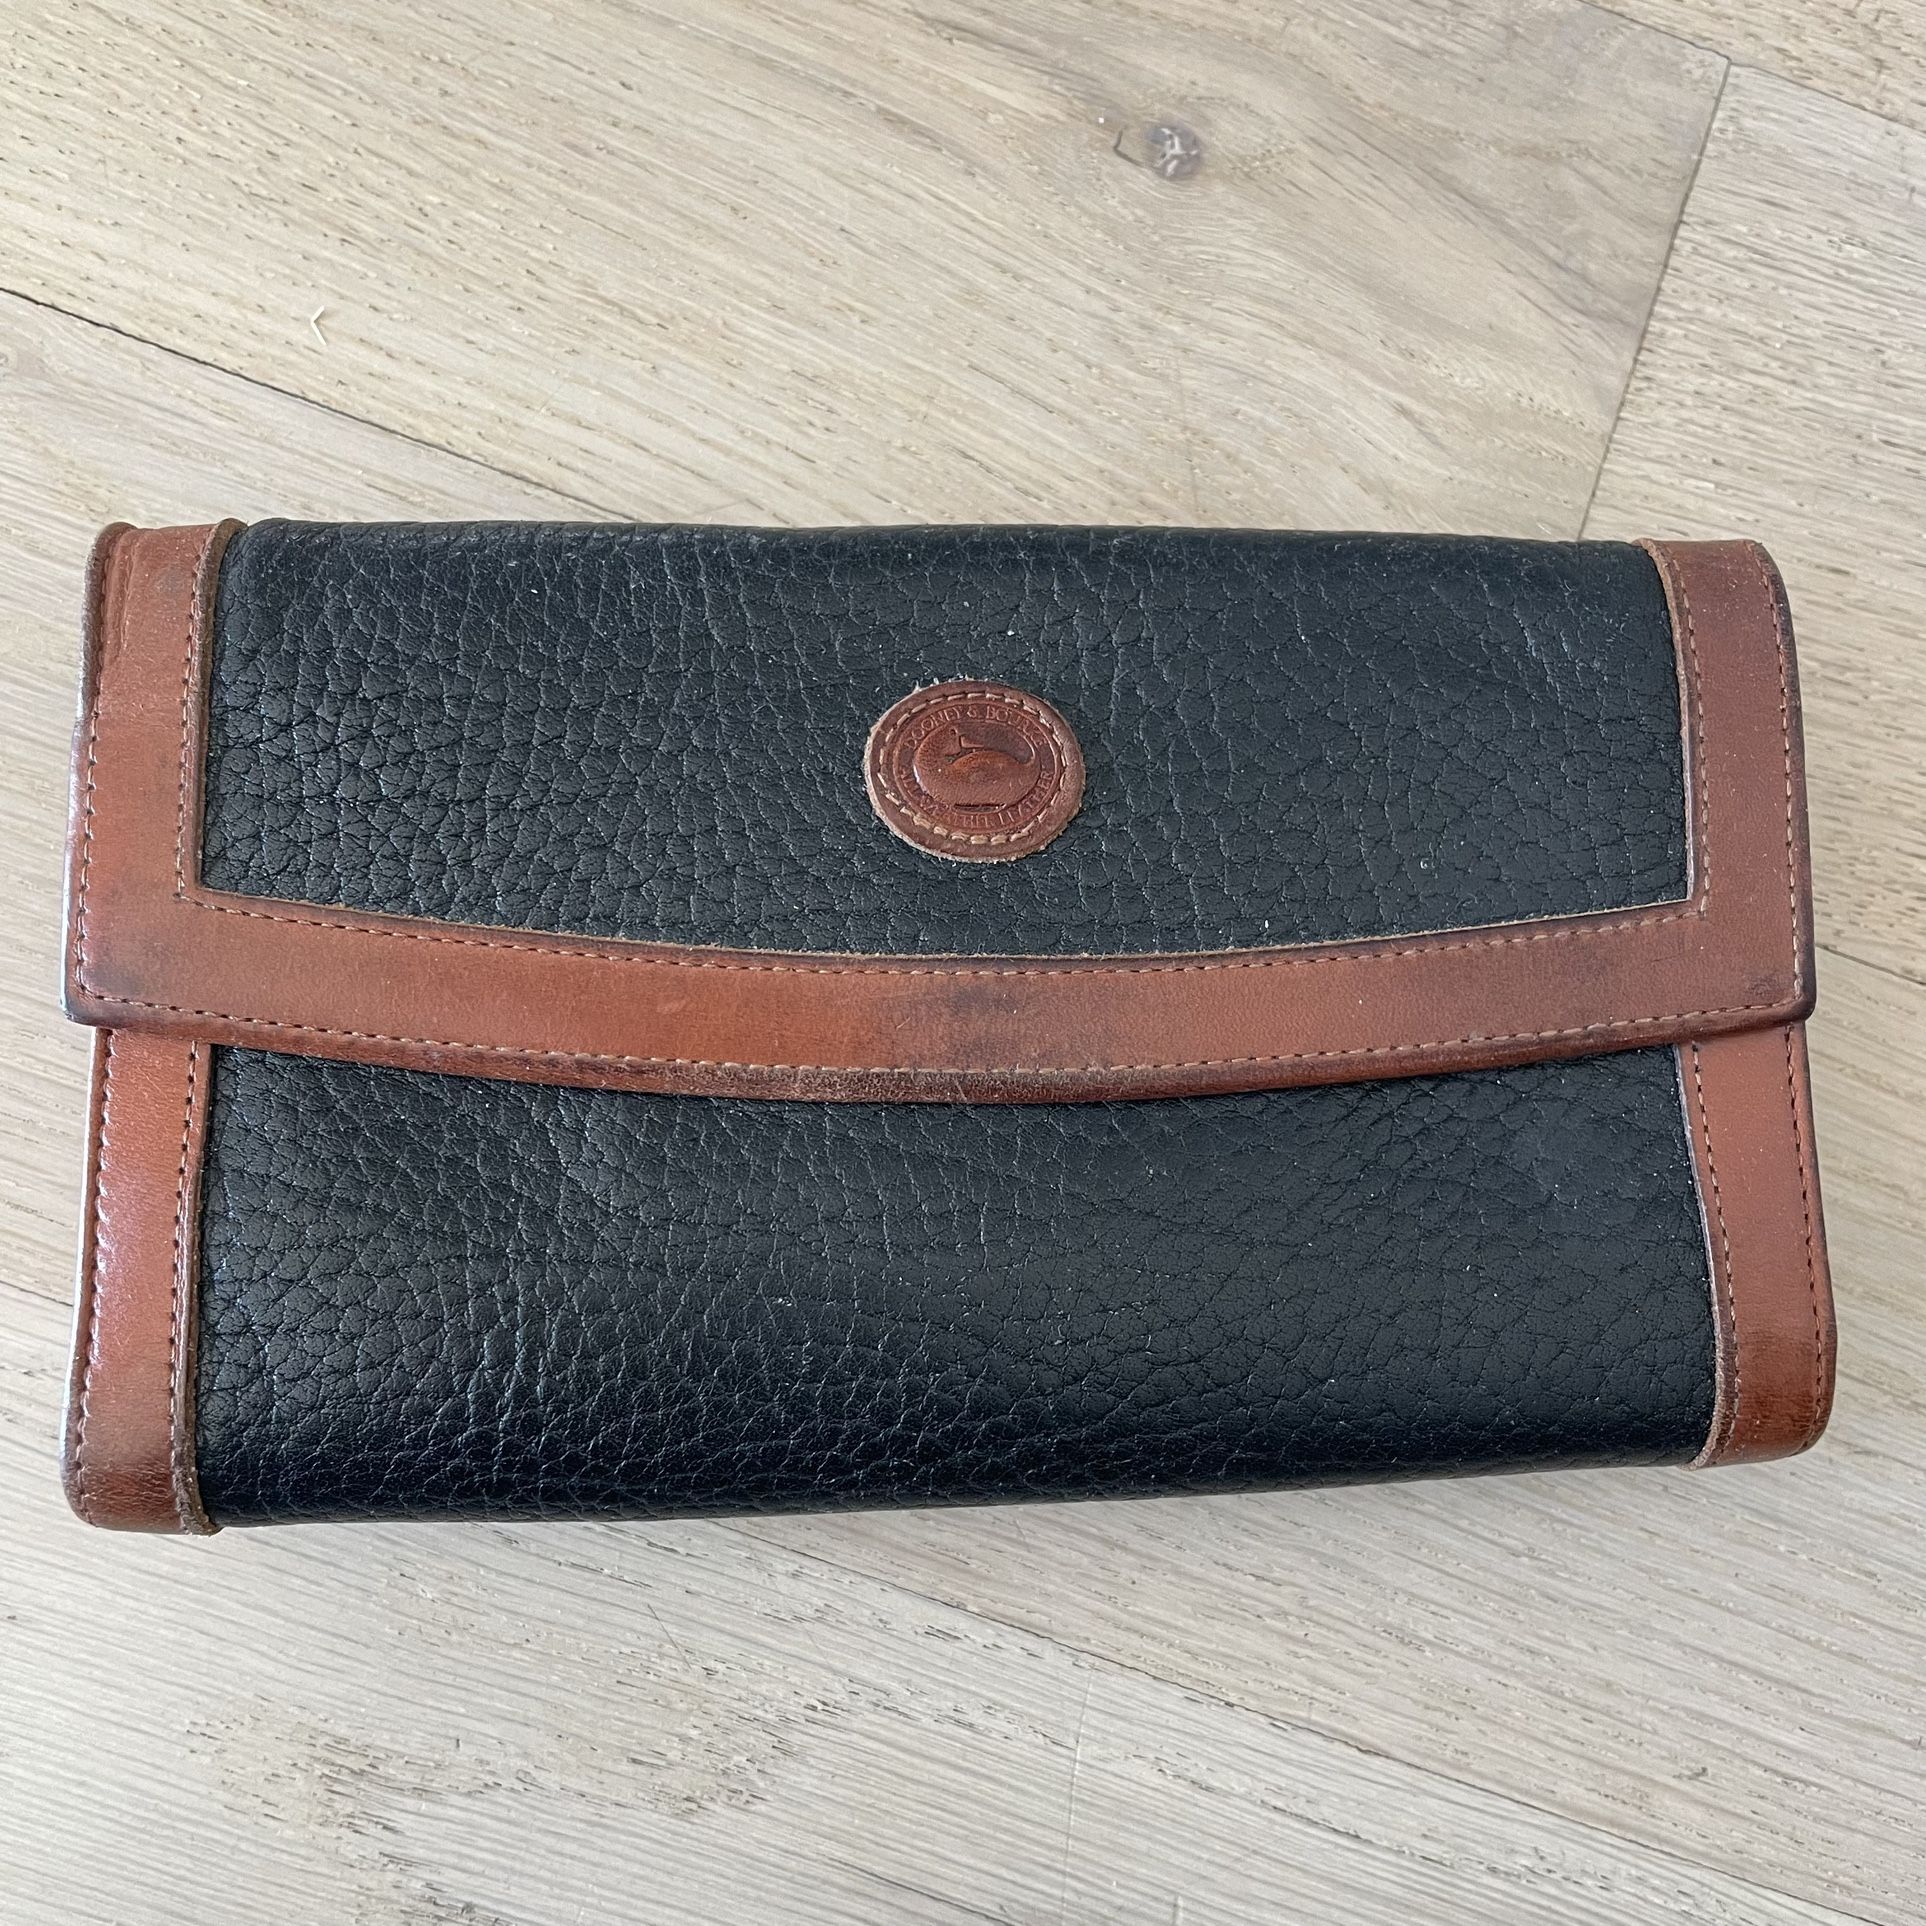 Dooney & Bourke Vintage Leather Trifold Flap Wallet